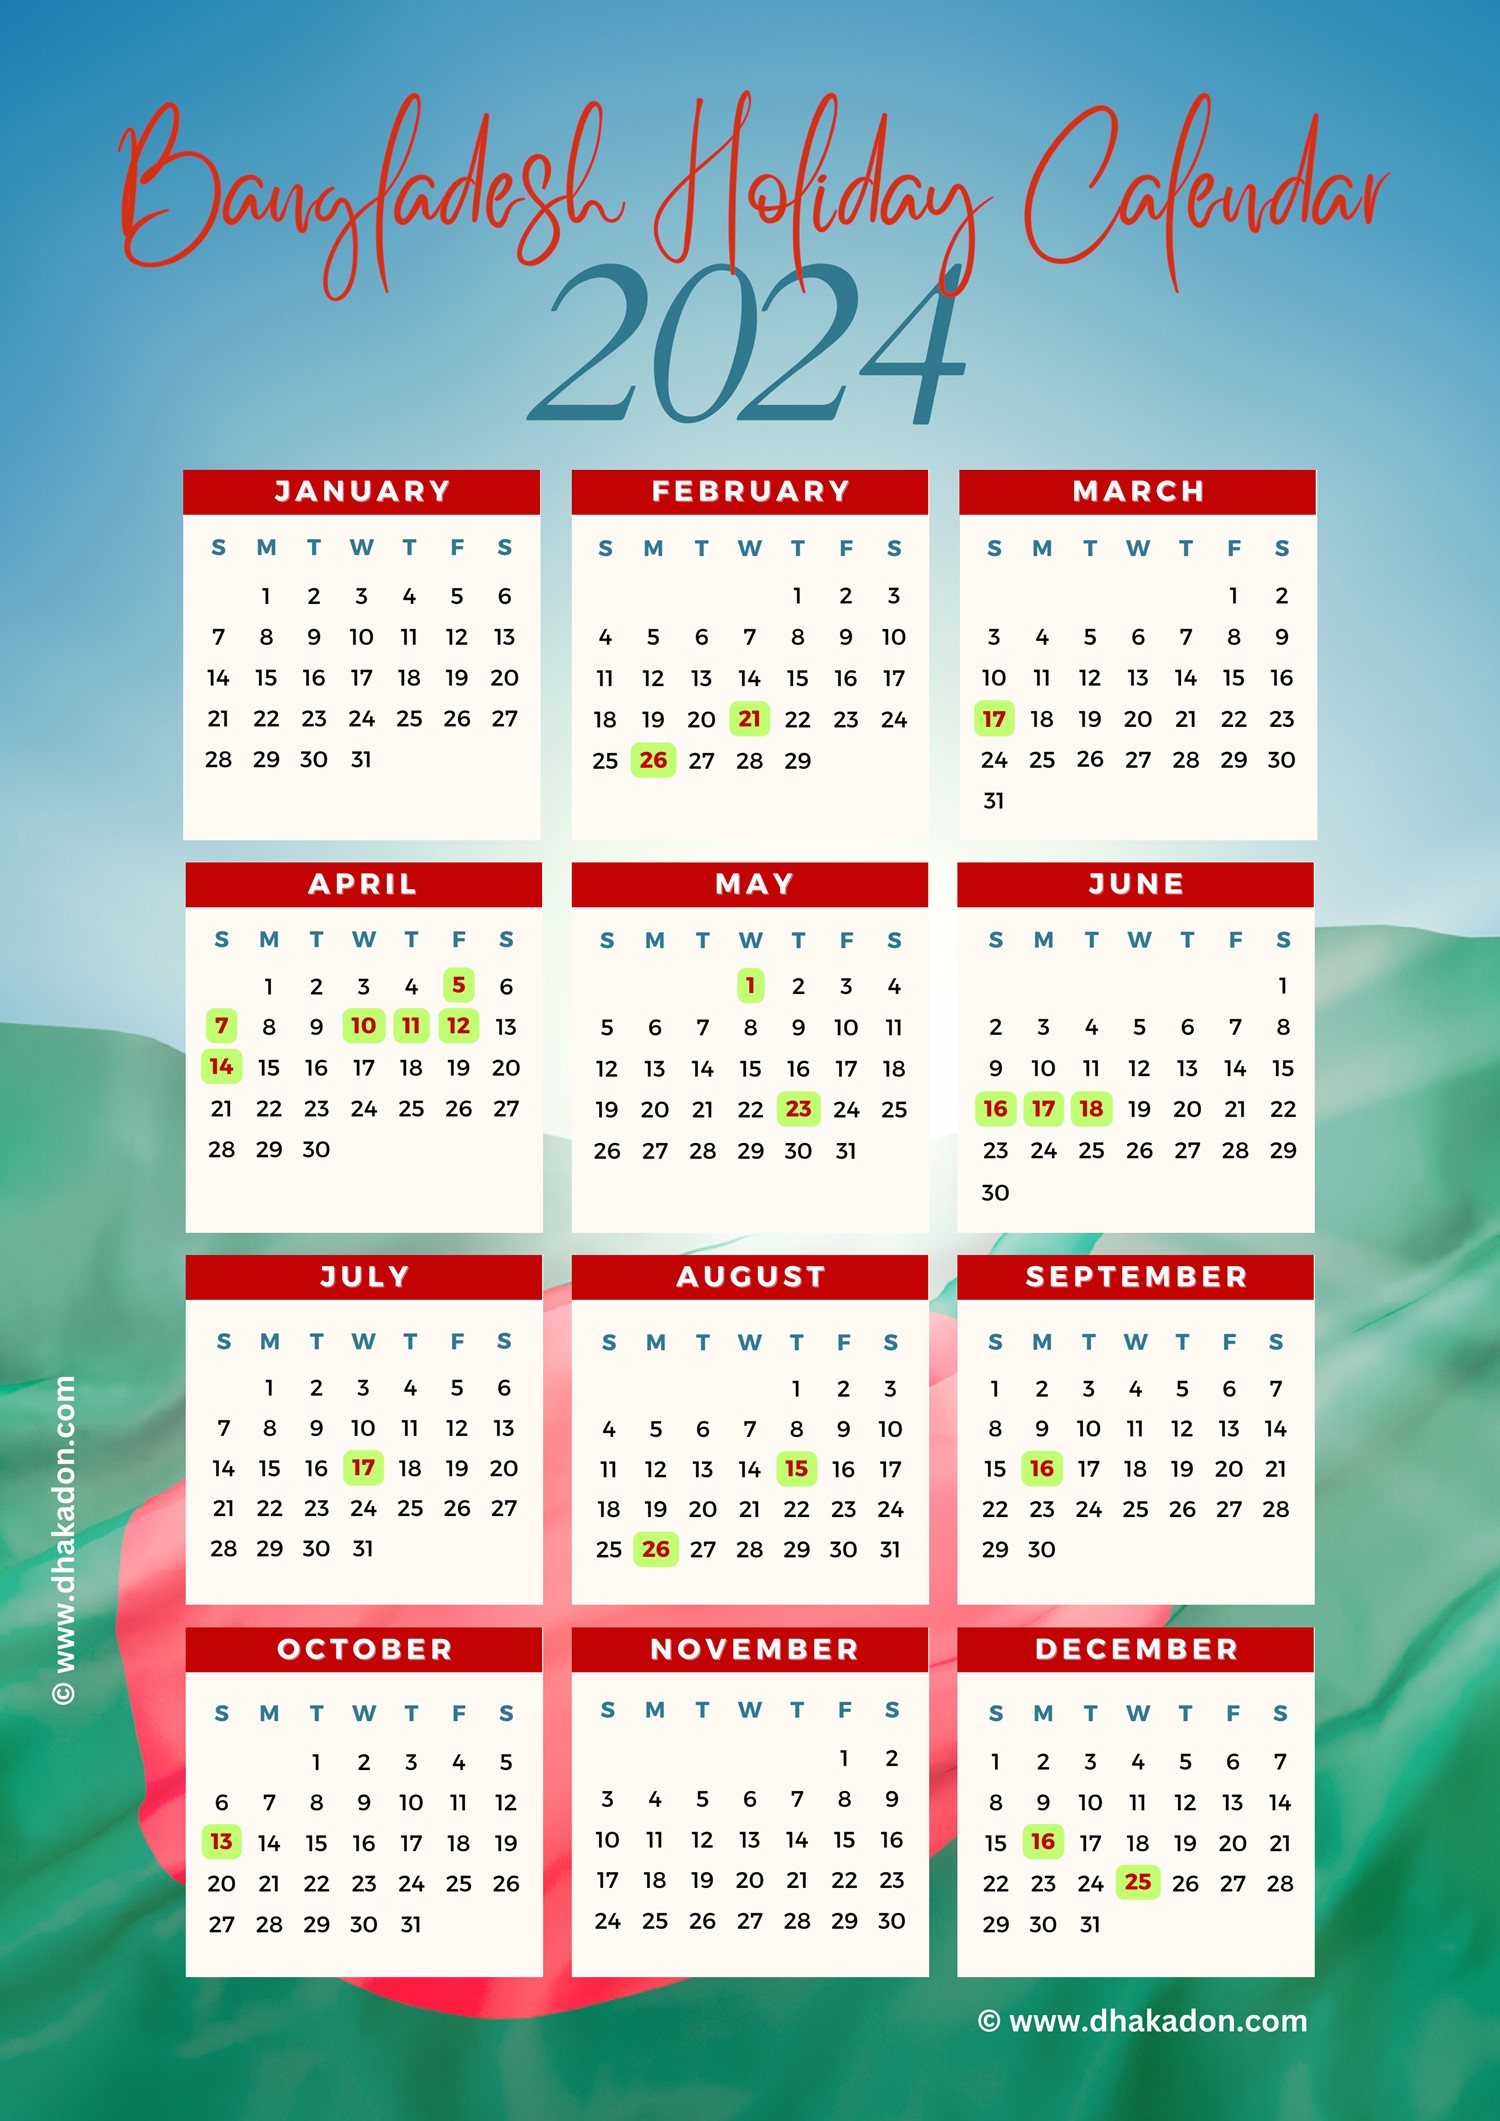 Bangladesh Holiday Calendar 2024